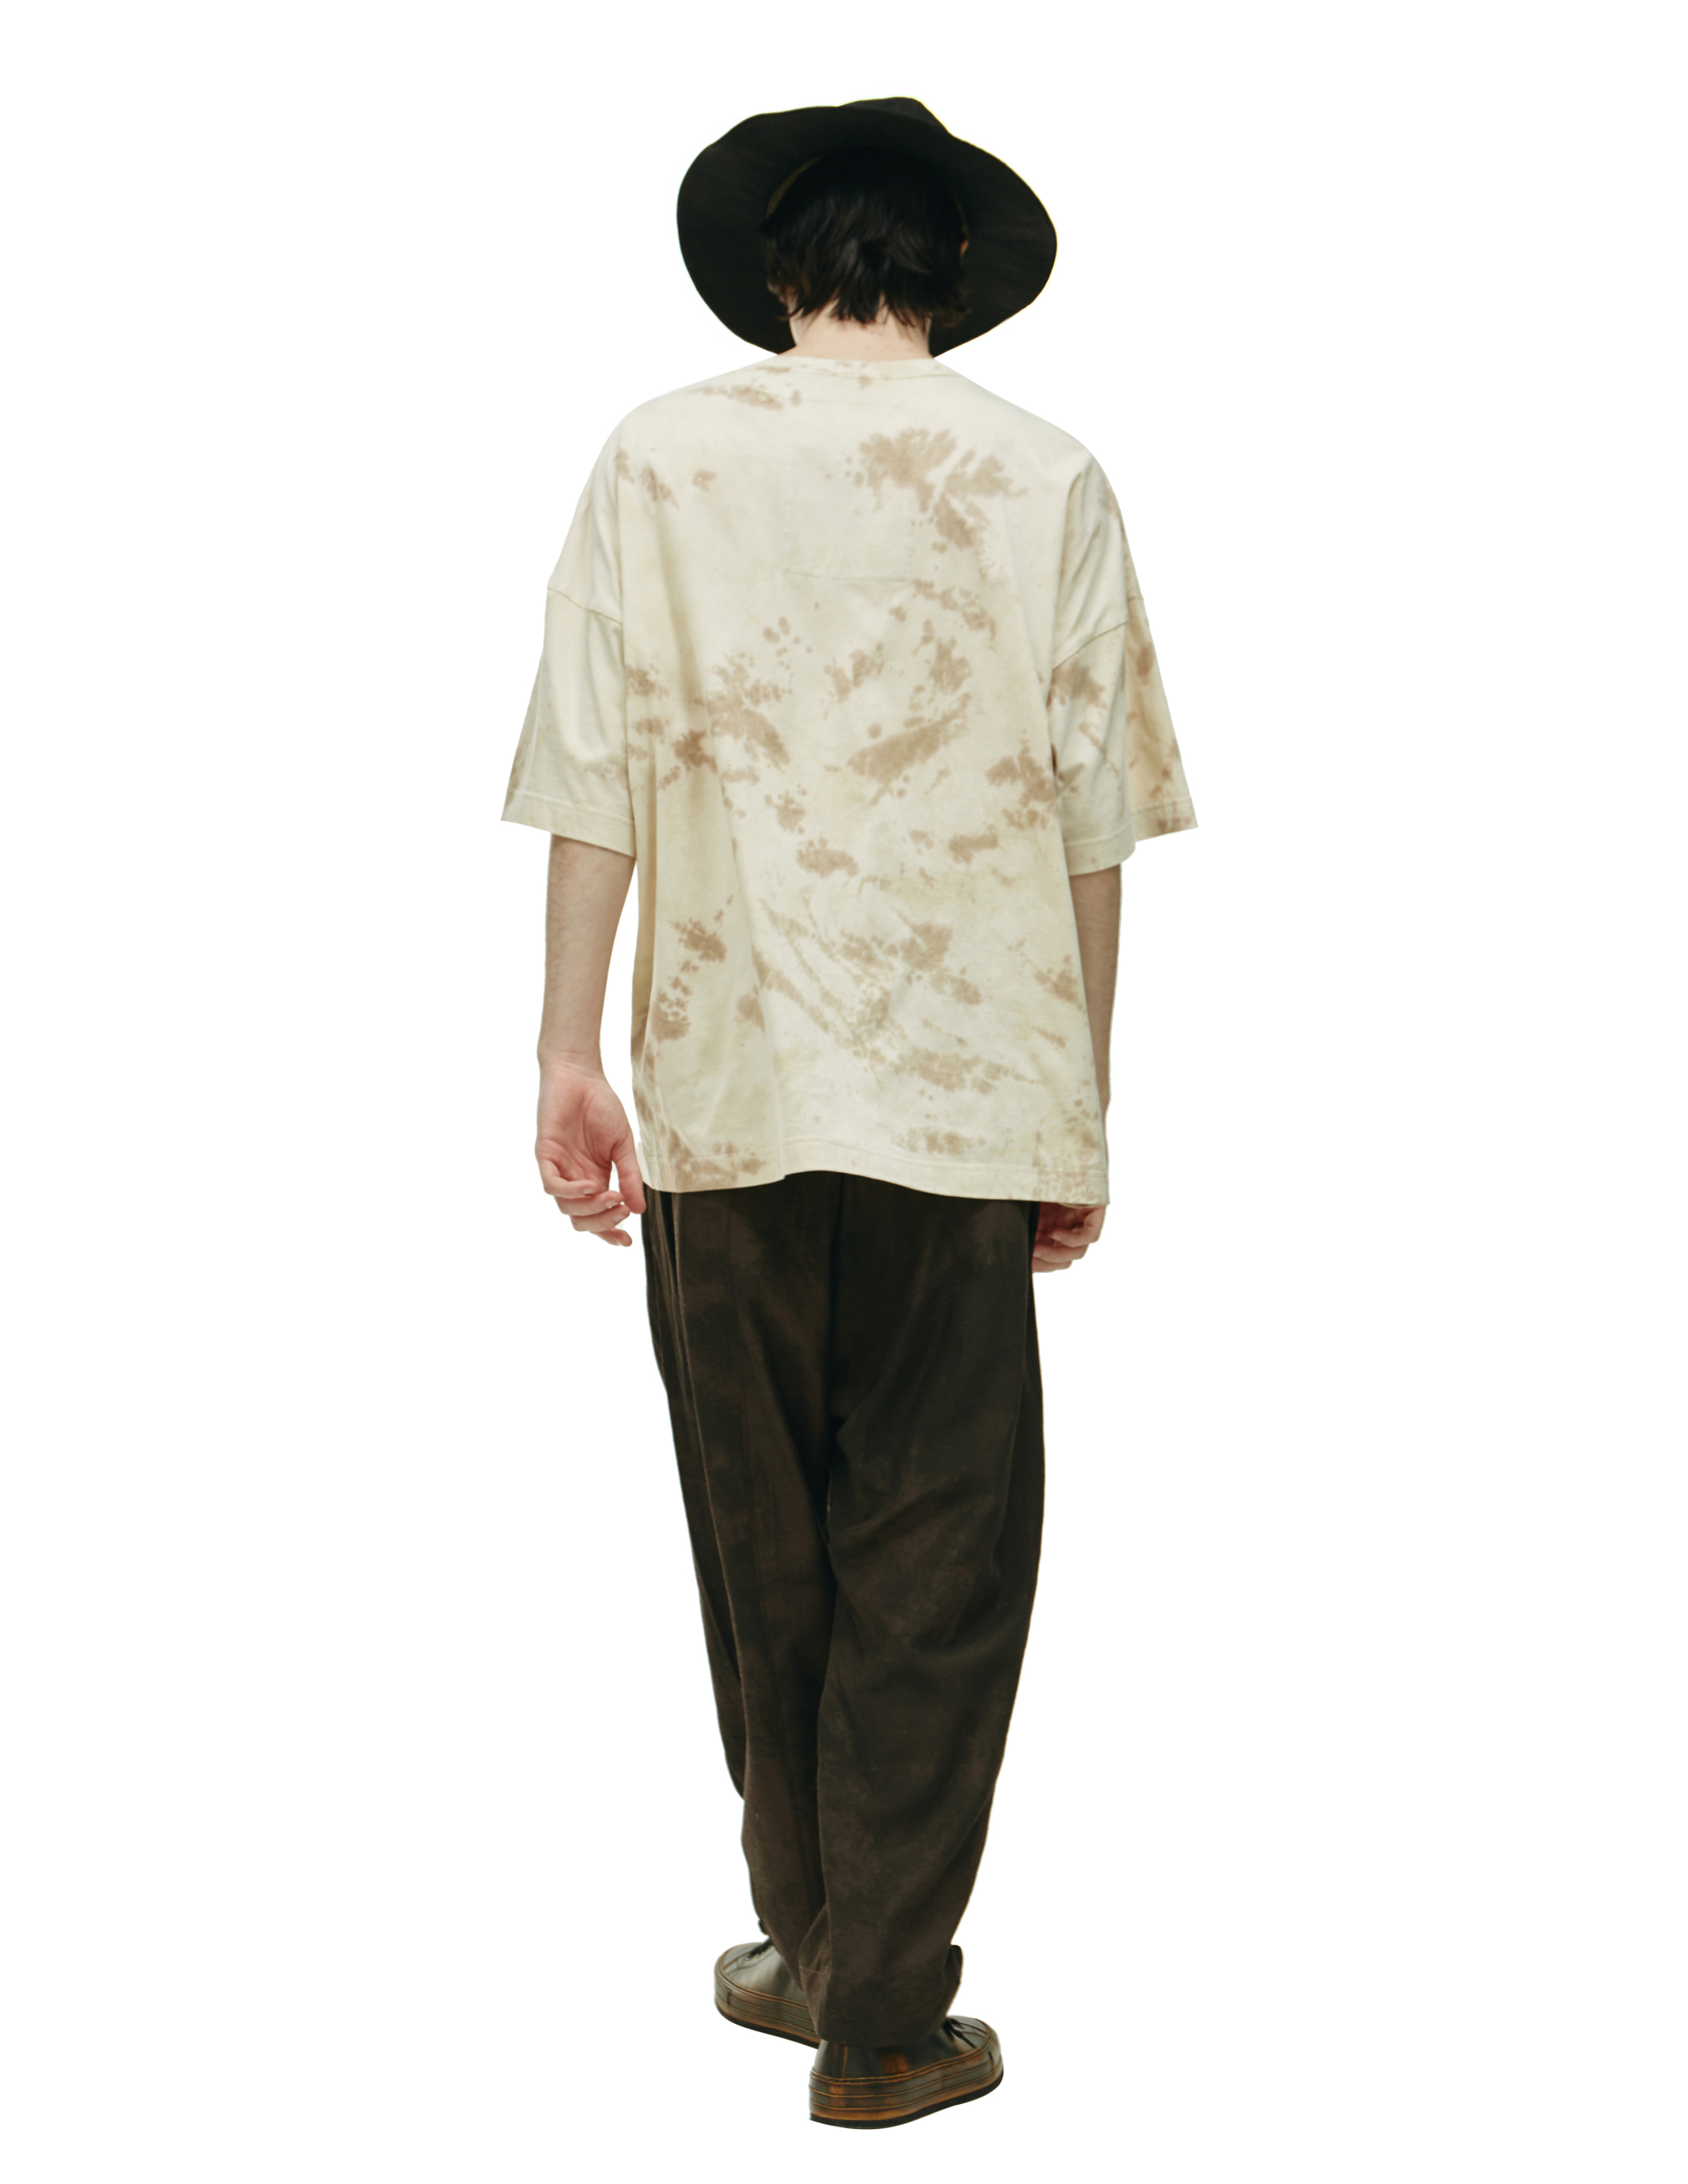 Бежевая футболка с принтом Ziggy Chen 0M2220202, размер 52;50;48;46 - фото 3